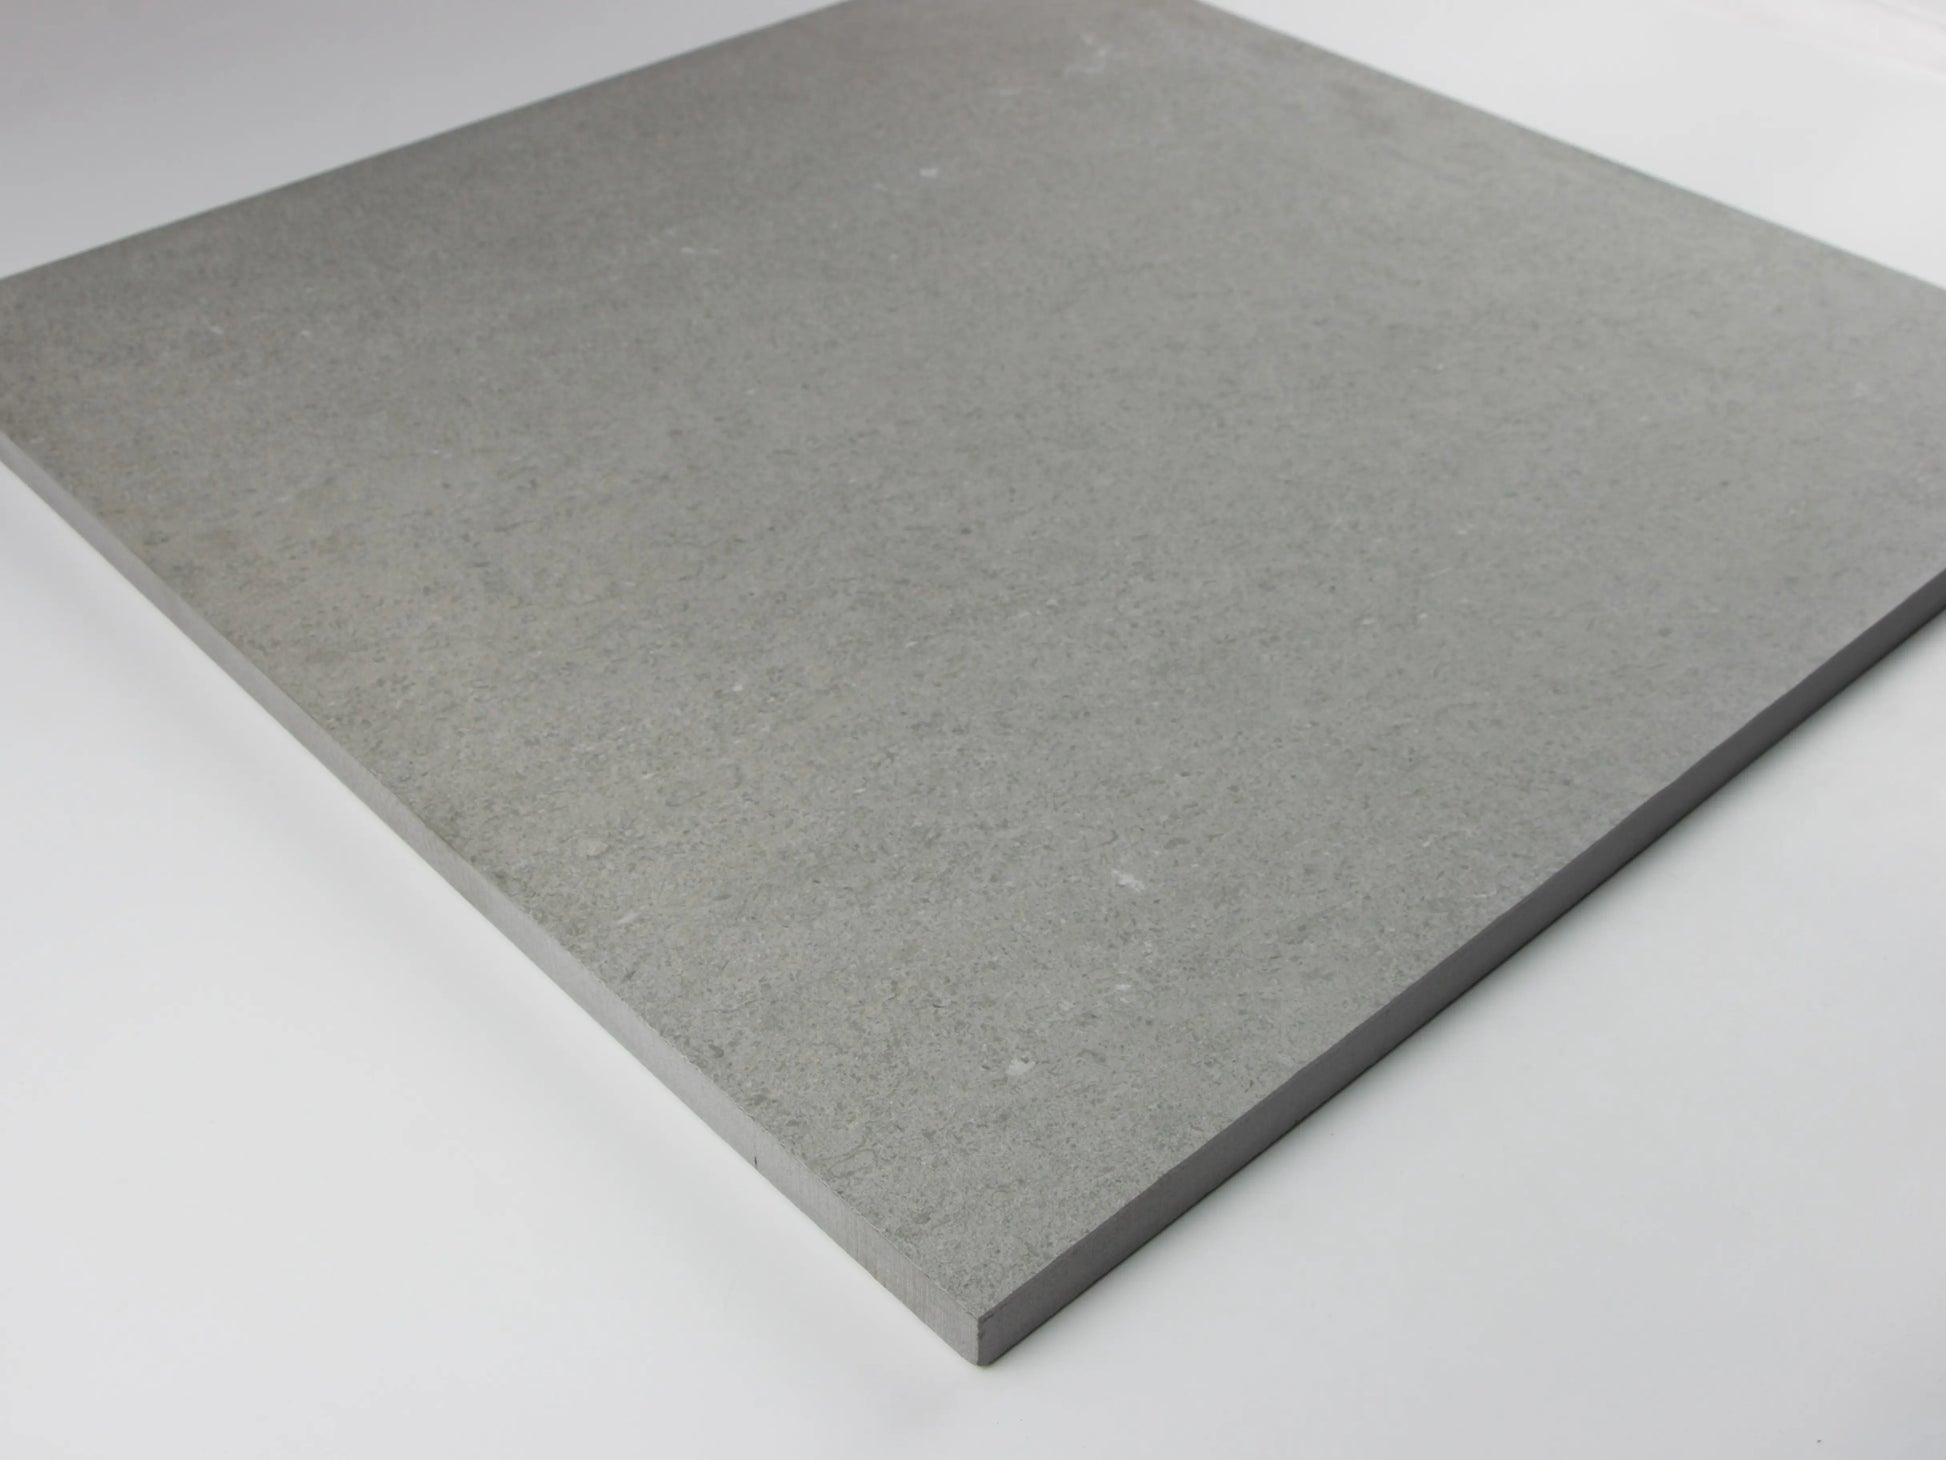 Concrete Italian Grey Natural Finish Exterior Pool Paver   24" x 24"